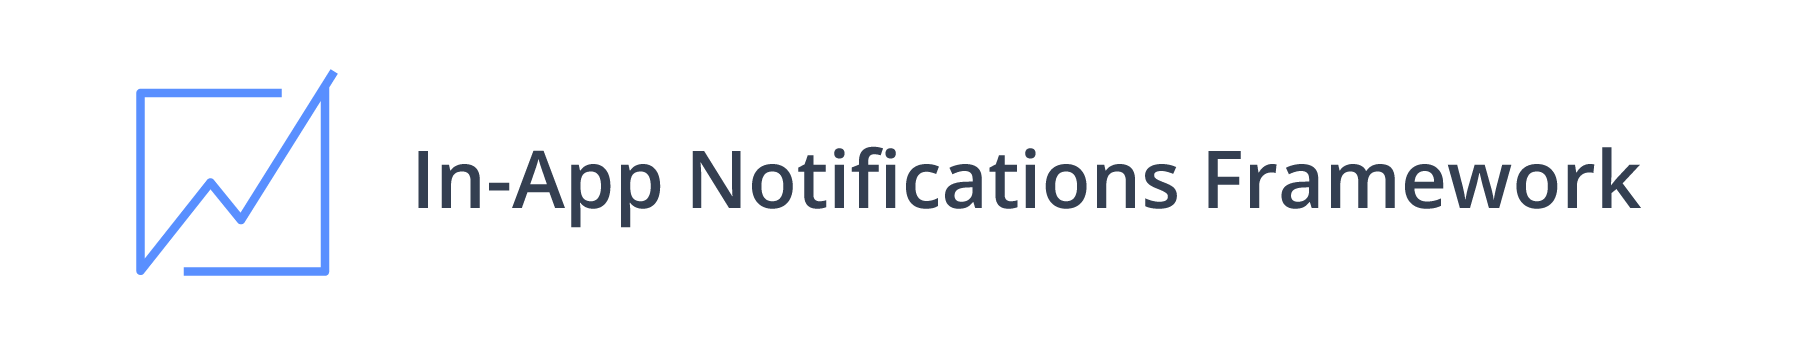 FBNotifications logo